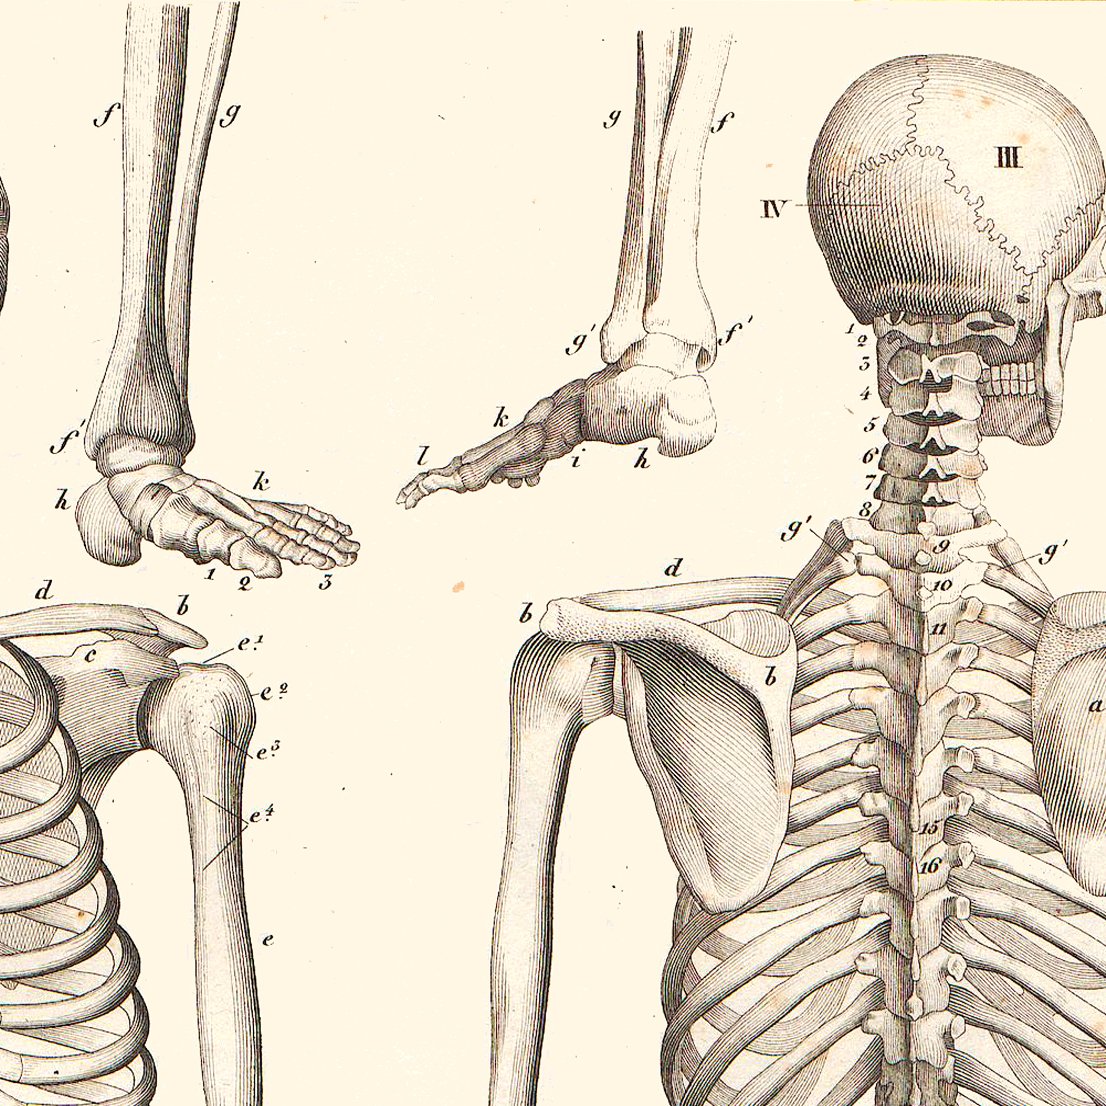 Skeleton Anatomy Poster by Oken